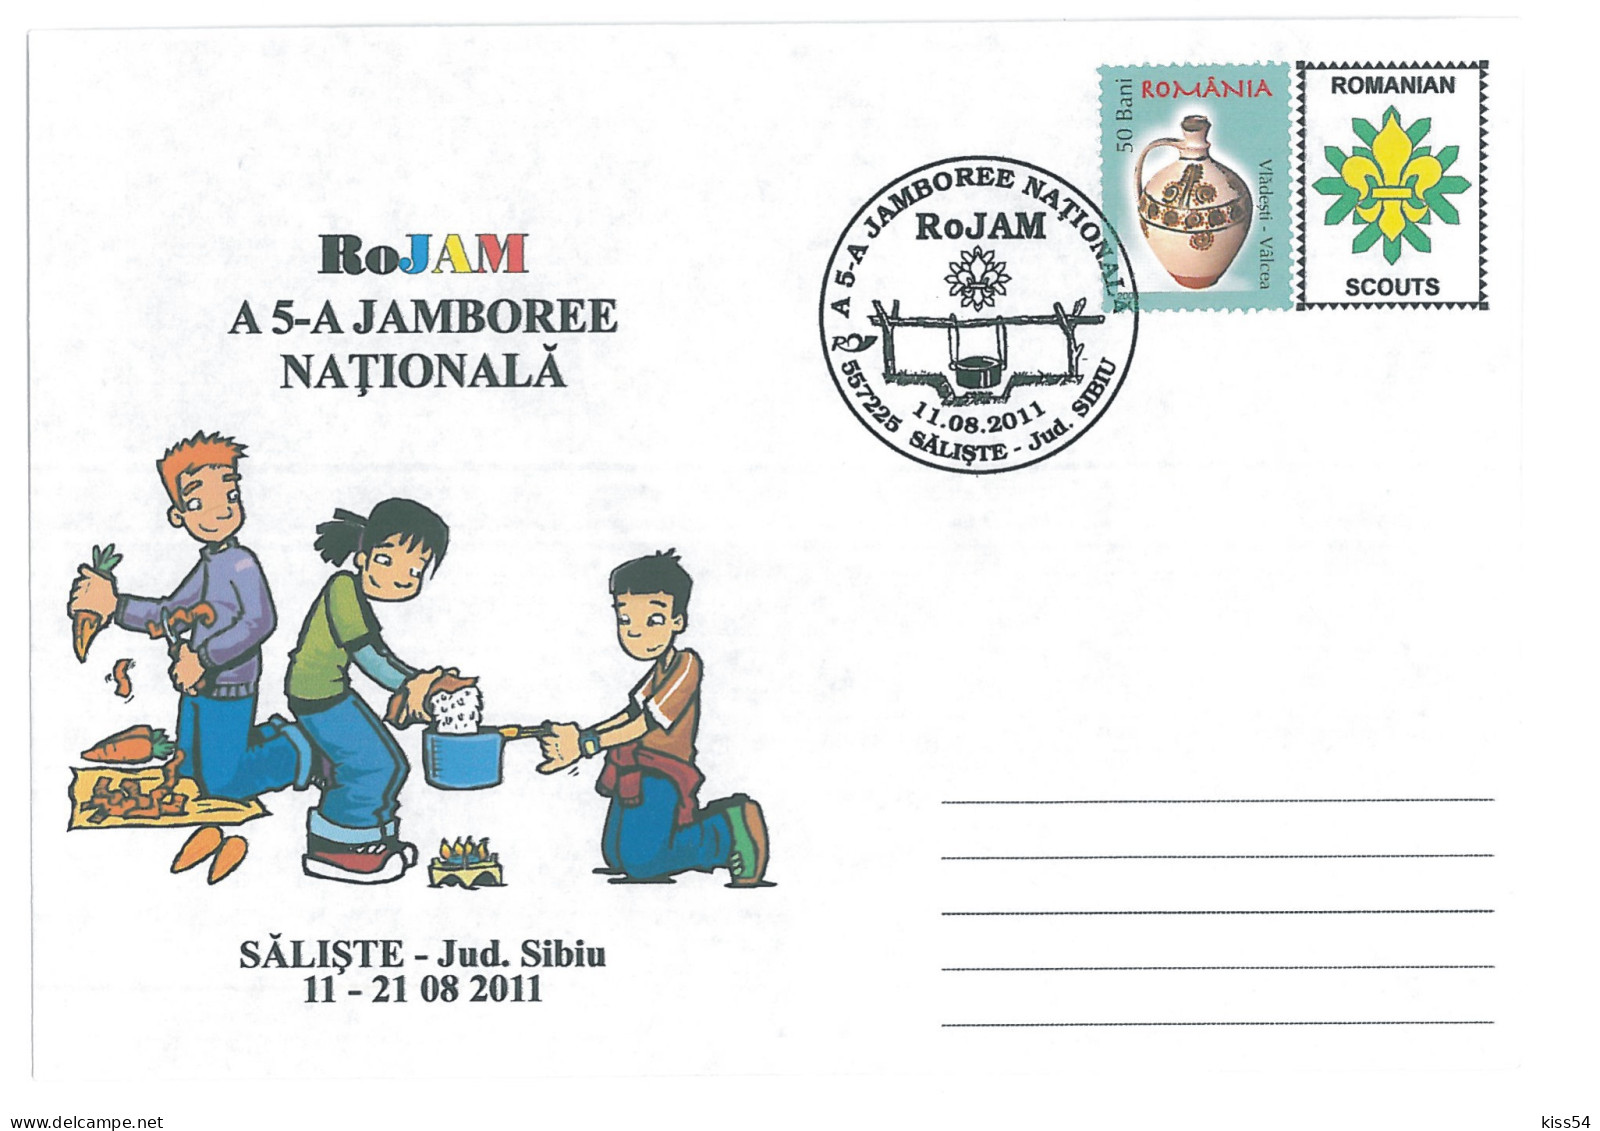 SC 47 - 1298 ROMANIA, National JAMBOREE, Scout - Cover - Used - 2011 - Storia Postale